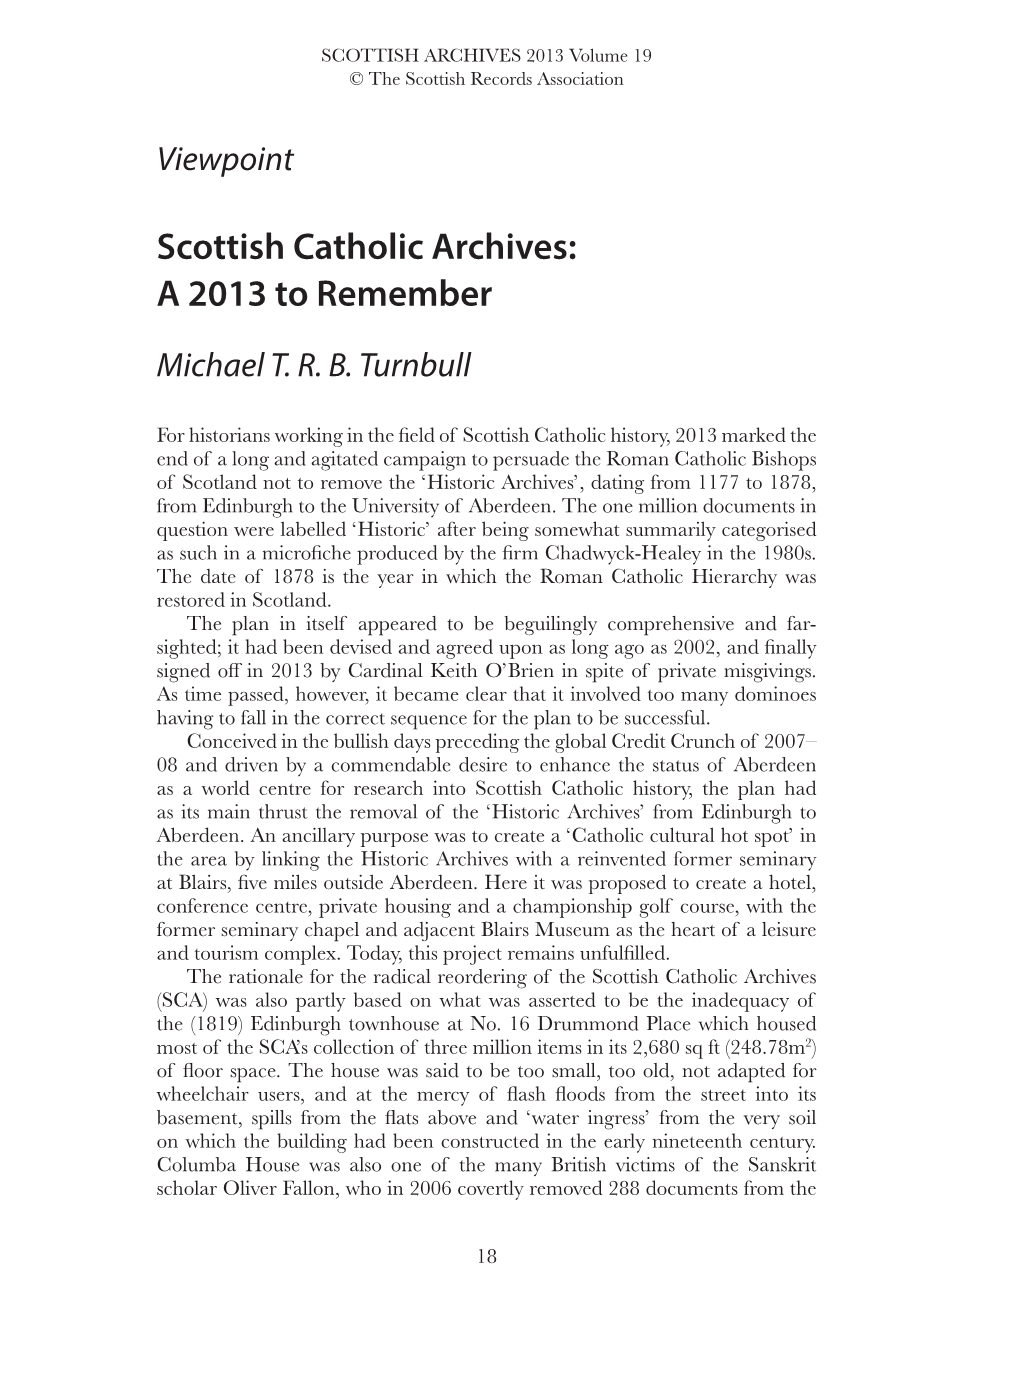 Scottish Catholic Archives: a 2013 to Remember